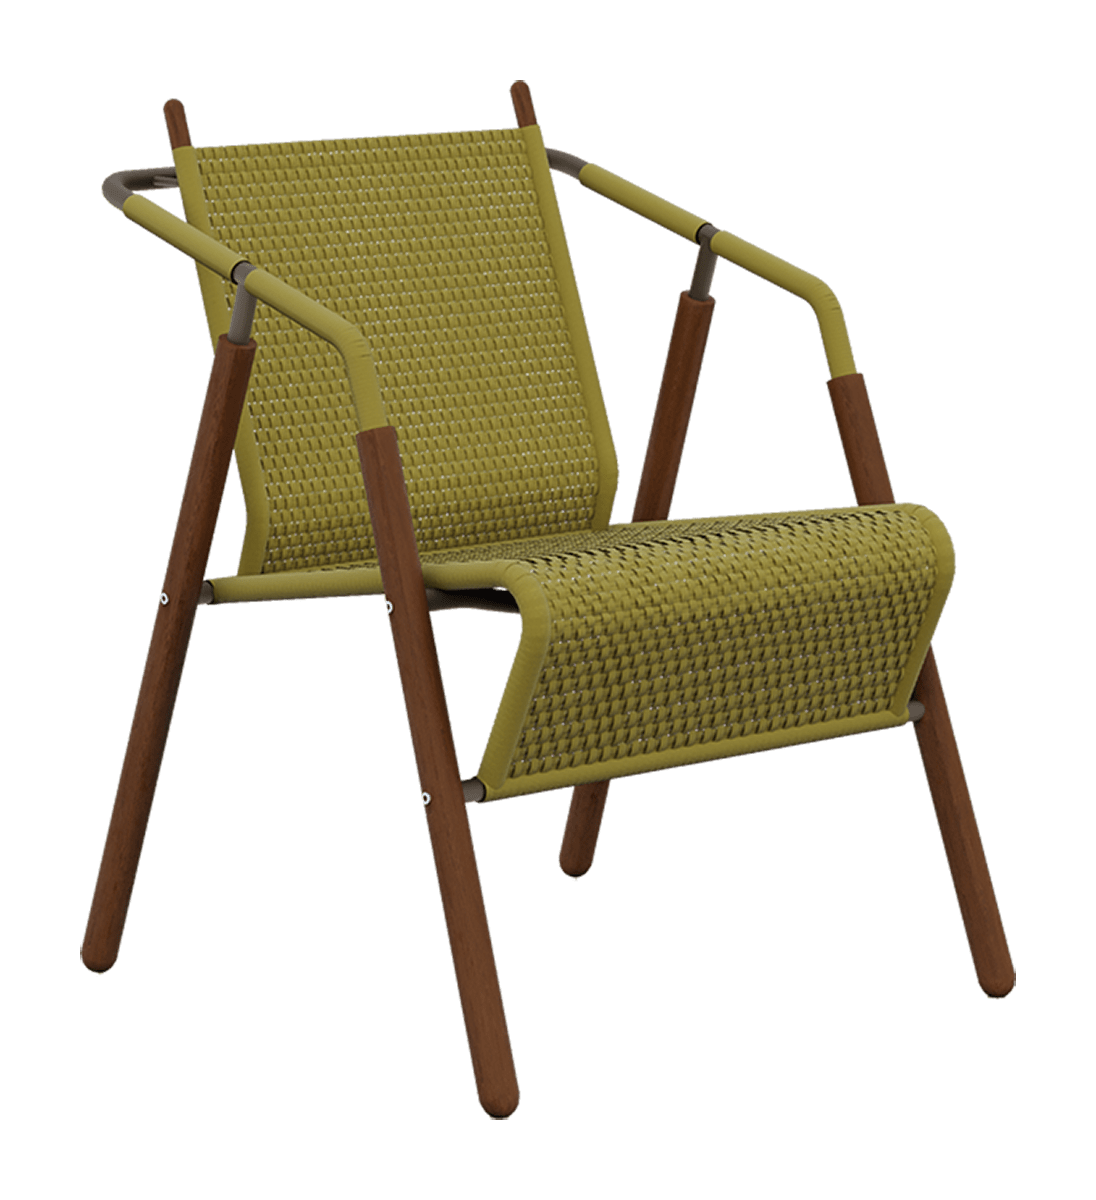 Cadeira Ara Aluminio Madeira Corda POPU06 1200px ld01 1 571x700 1 1 deezign